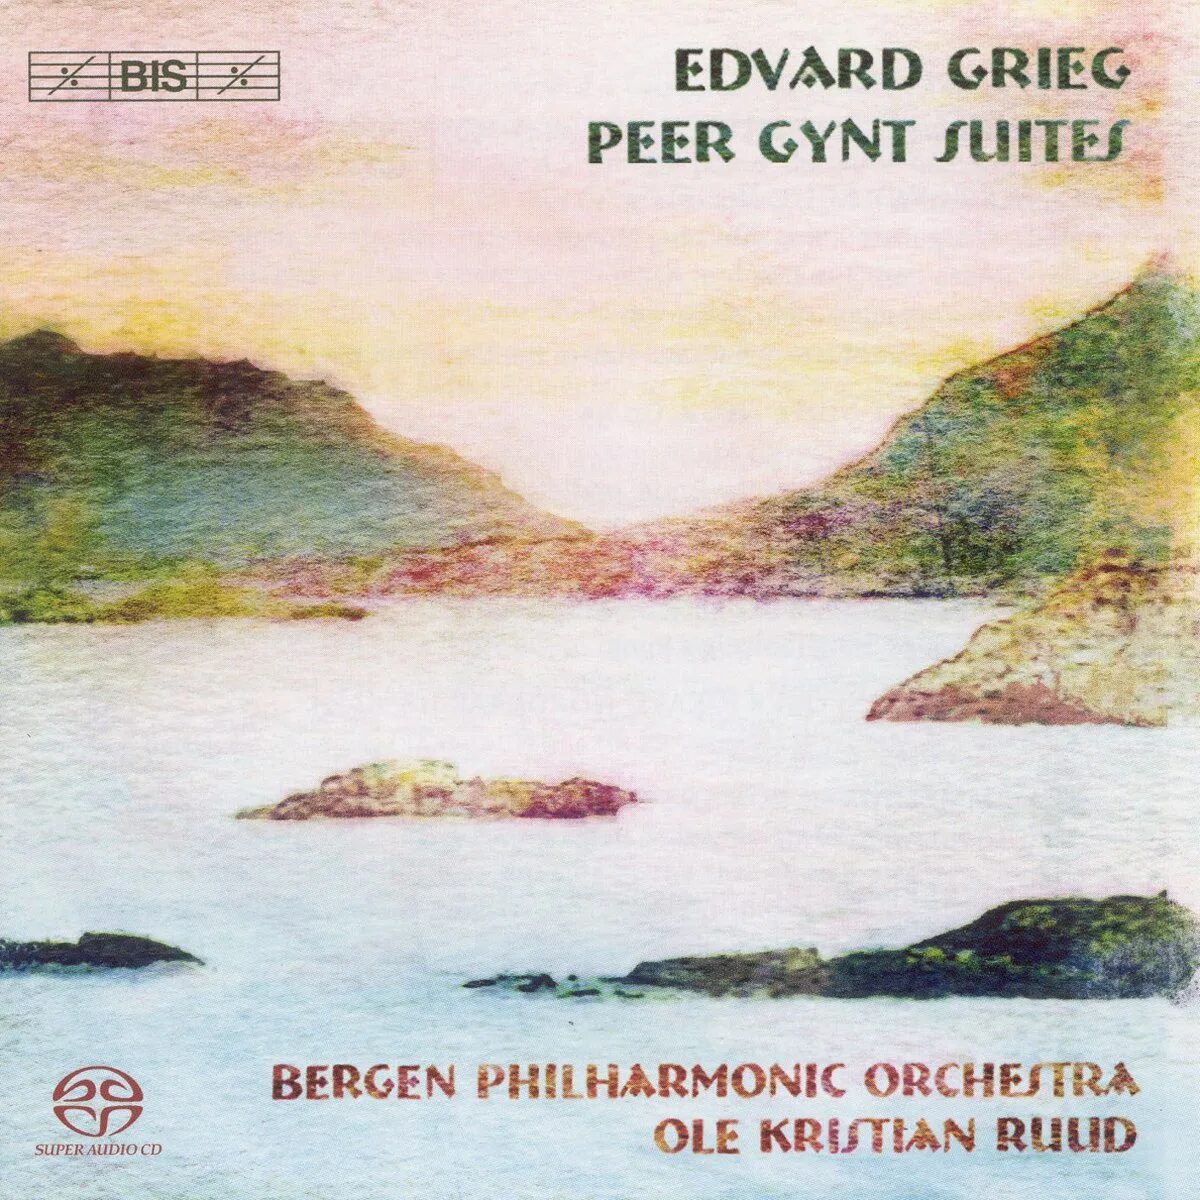 Peer Gynt. Григ берген. Edvard Grieg: "peer Gynt - morning mood".